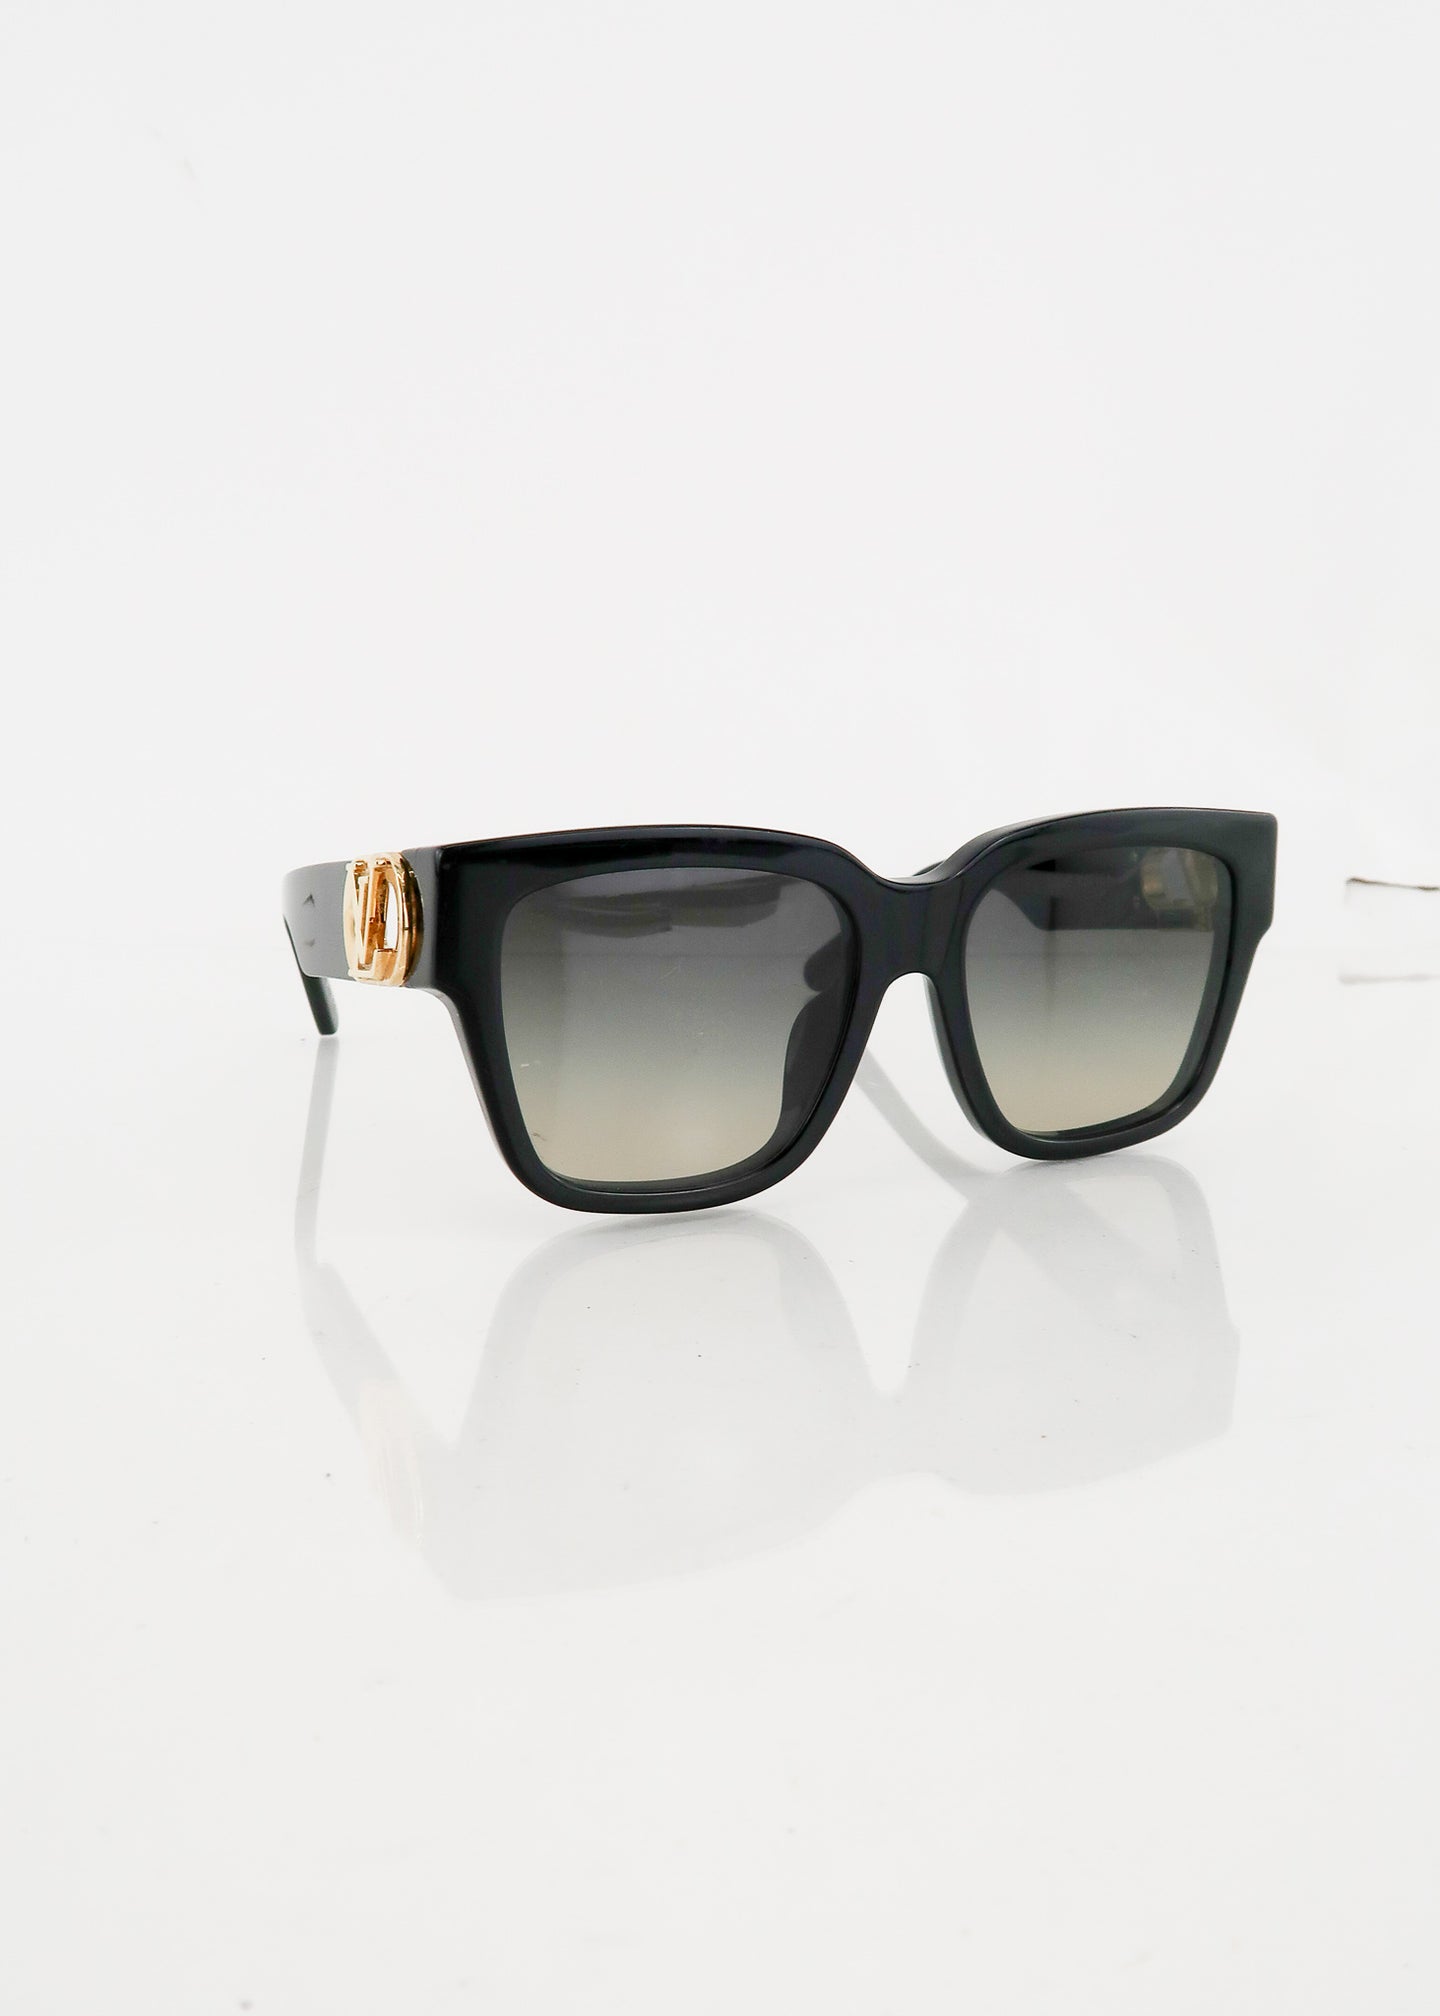 Louis Vuitton LV Link Cat Eye Sunglasses Black Acetate. Size W